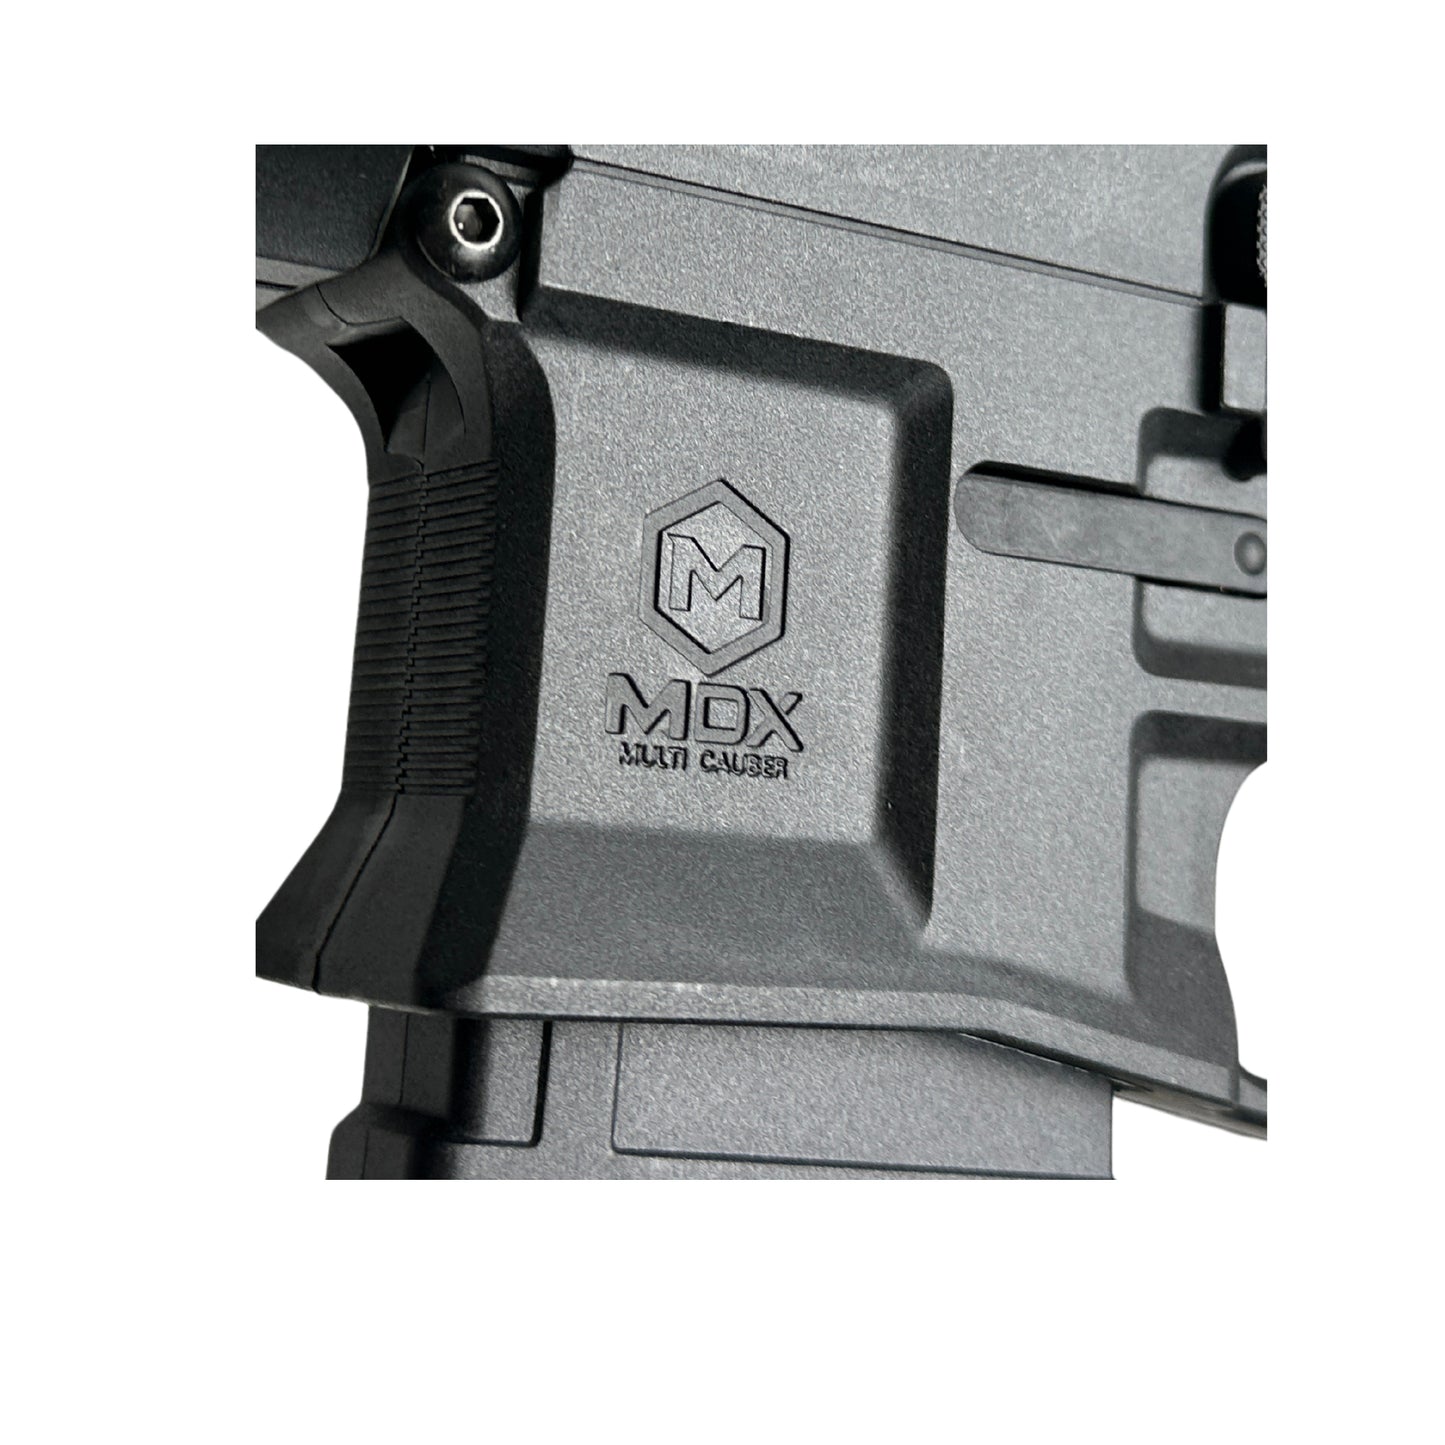 Maxim PDX Defence CQB Honey Badger - Gel Blaster - Black